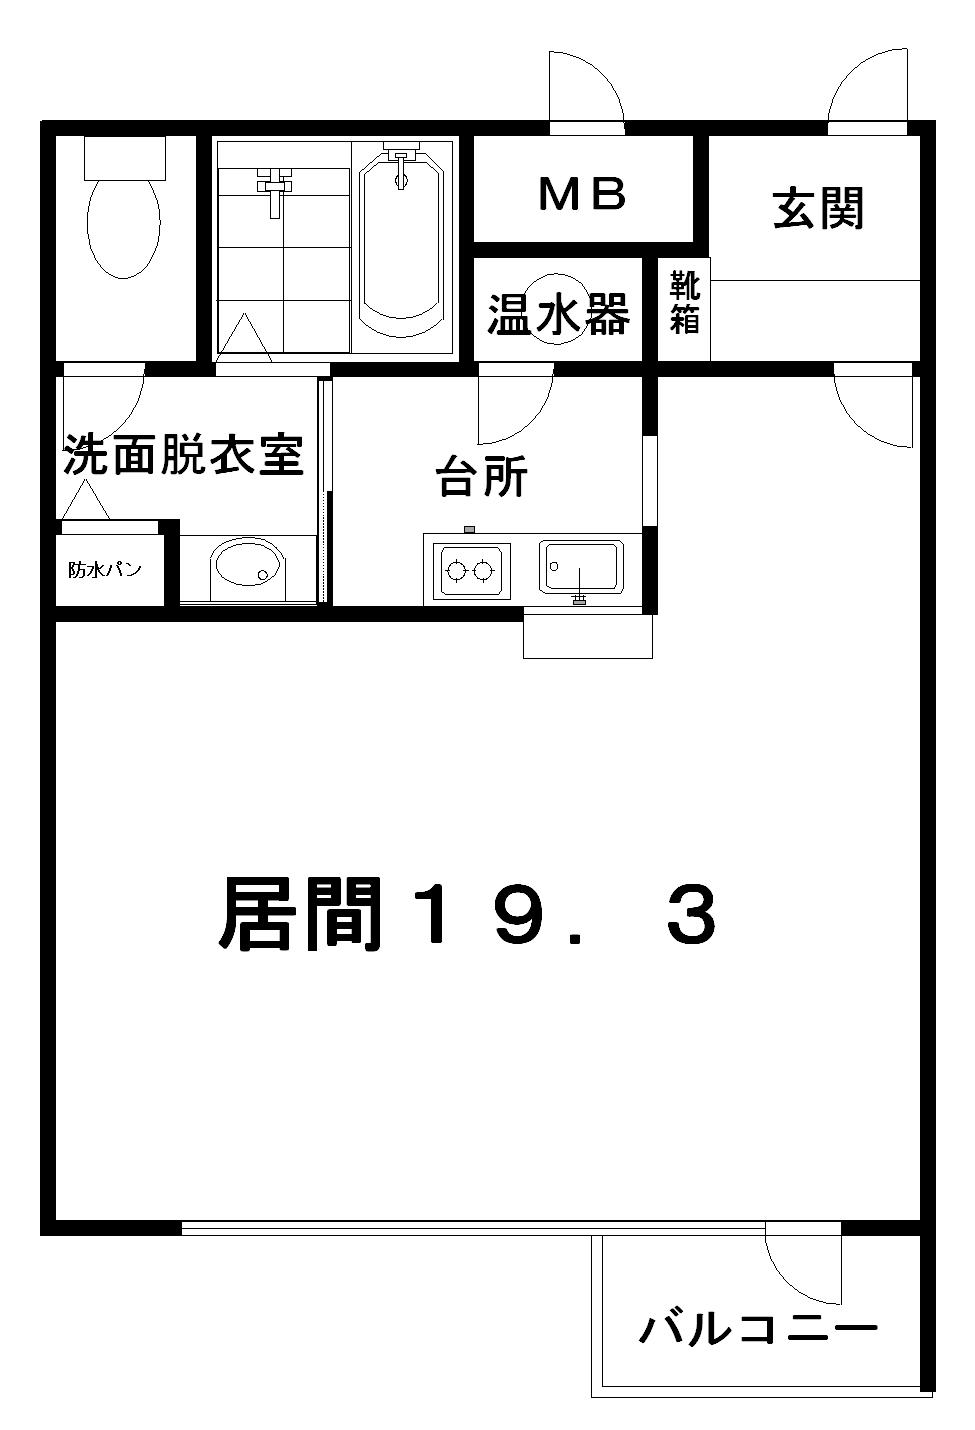 Floor plan. Price 3.8 million yen, Occupied area 46.69 sq m , Balcony area 3 sq m